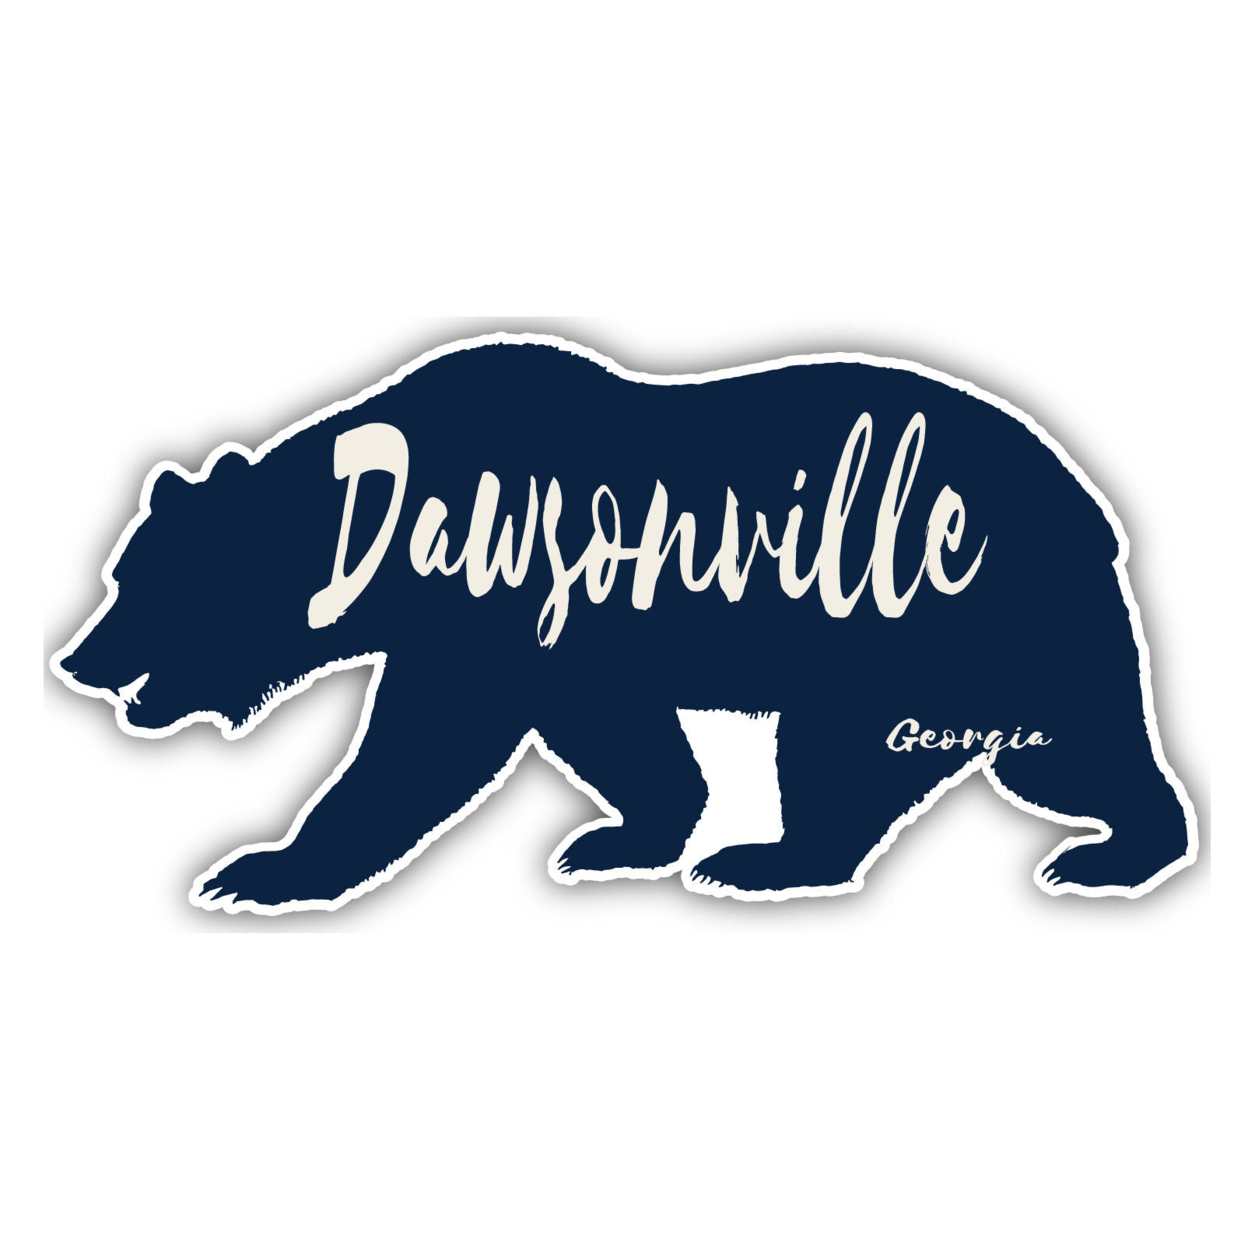 Dawsonville Georgia Souvenir Decorative Stickers (Choose Theme And Size) - Single Unit, 4-Inch, Great Outdoors